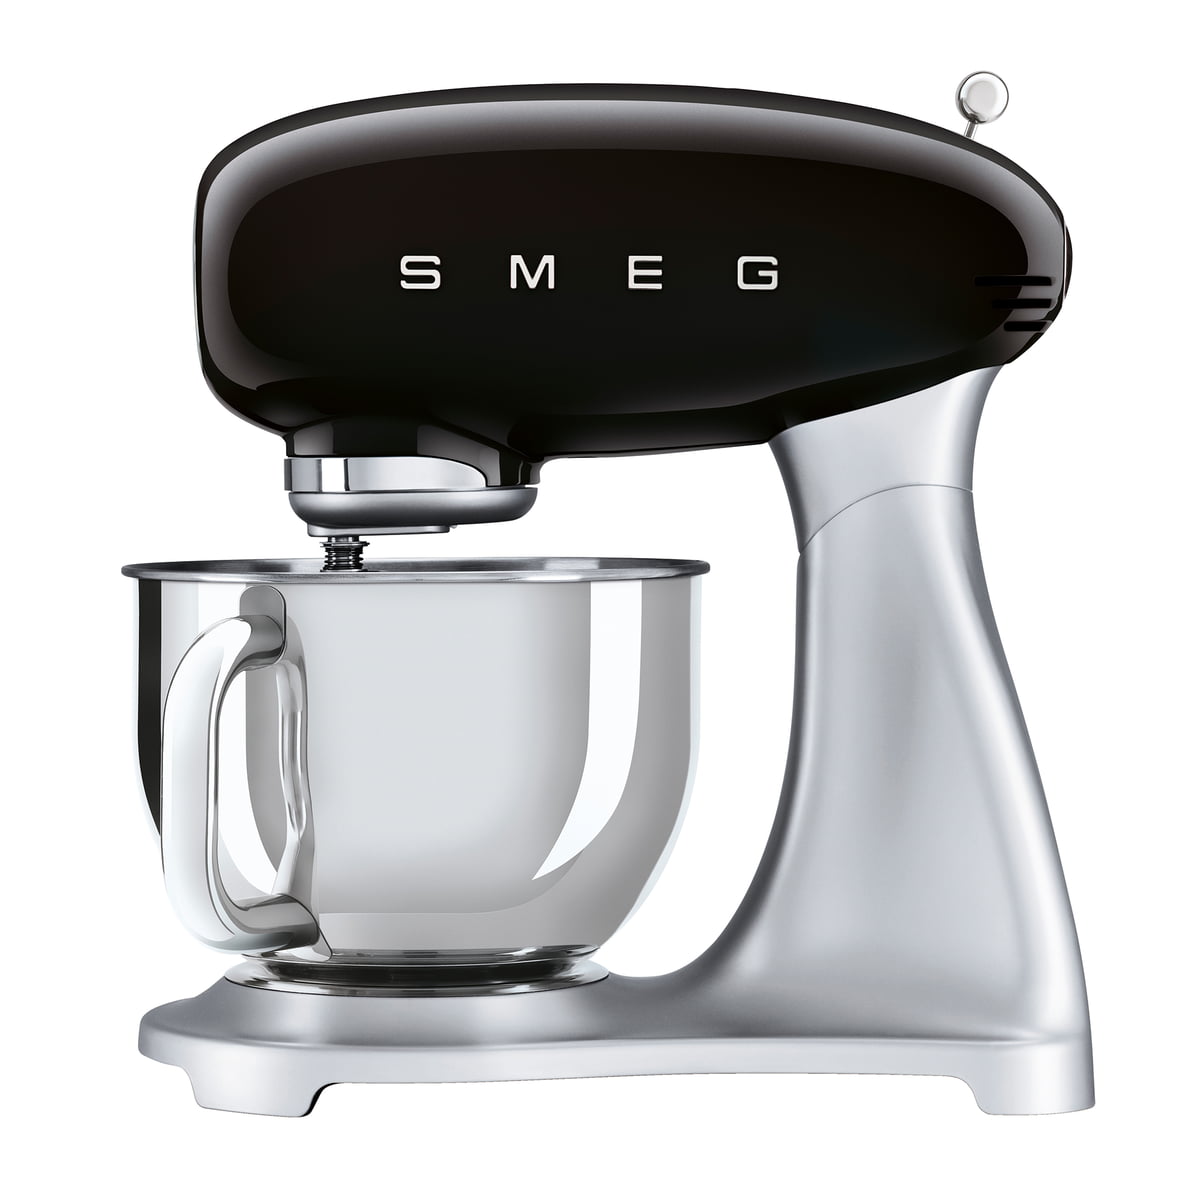 SMEG - Küchenmaschine SMF02, schwarz